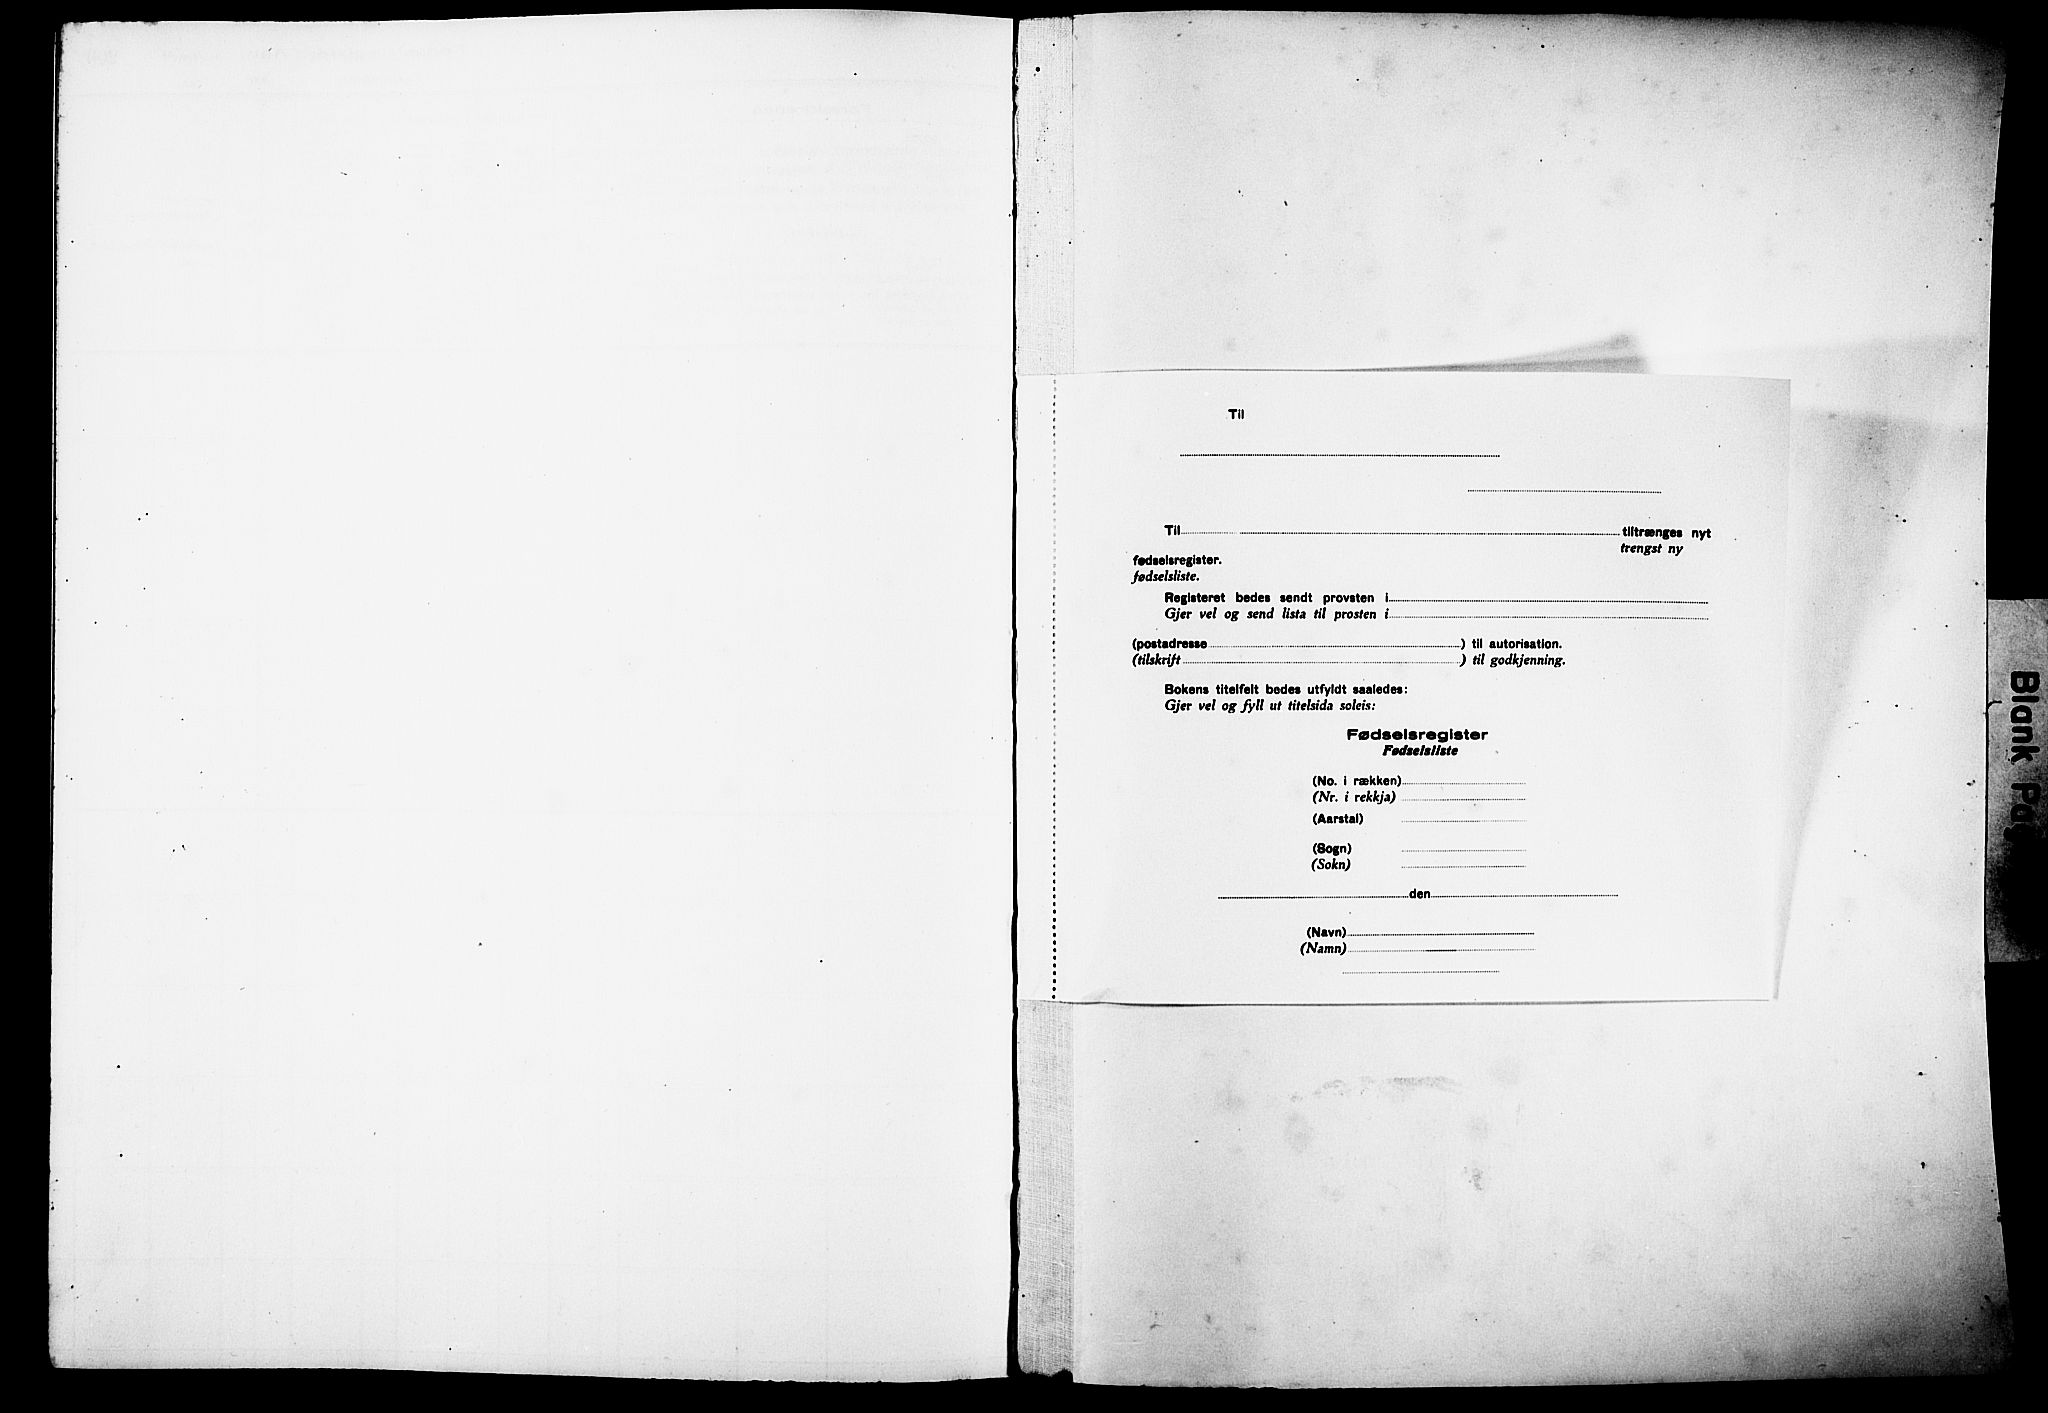 Birth register no. A 1, 1926-1929